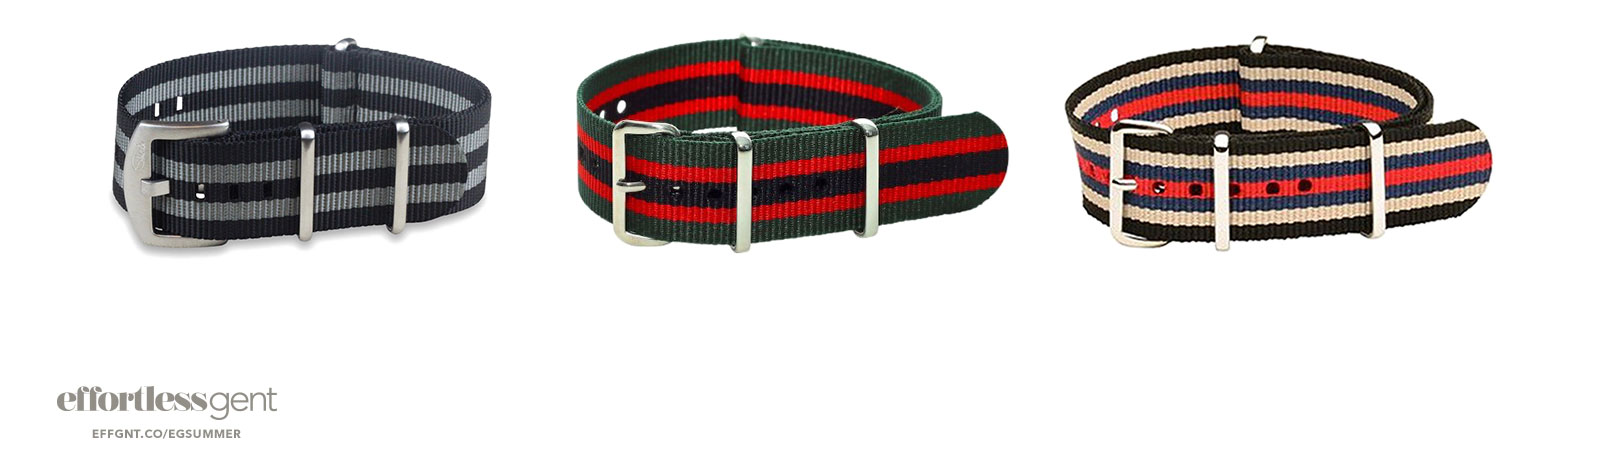 colorful nato watch straps for men